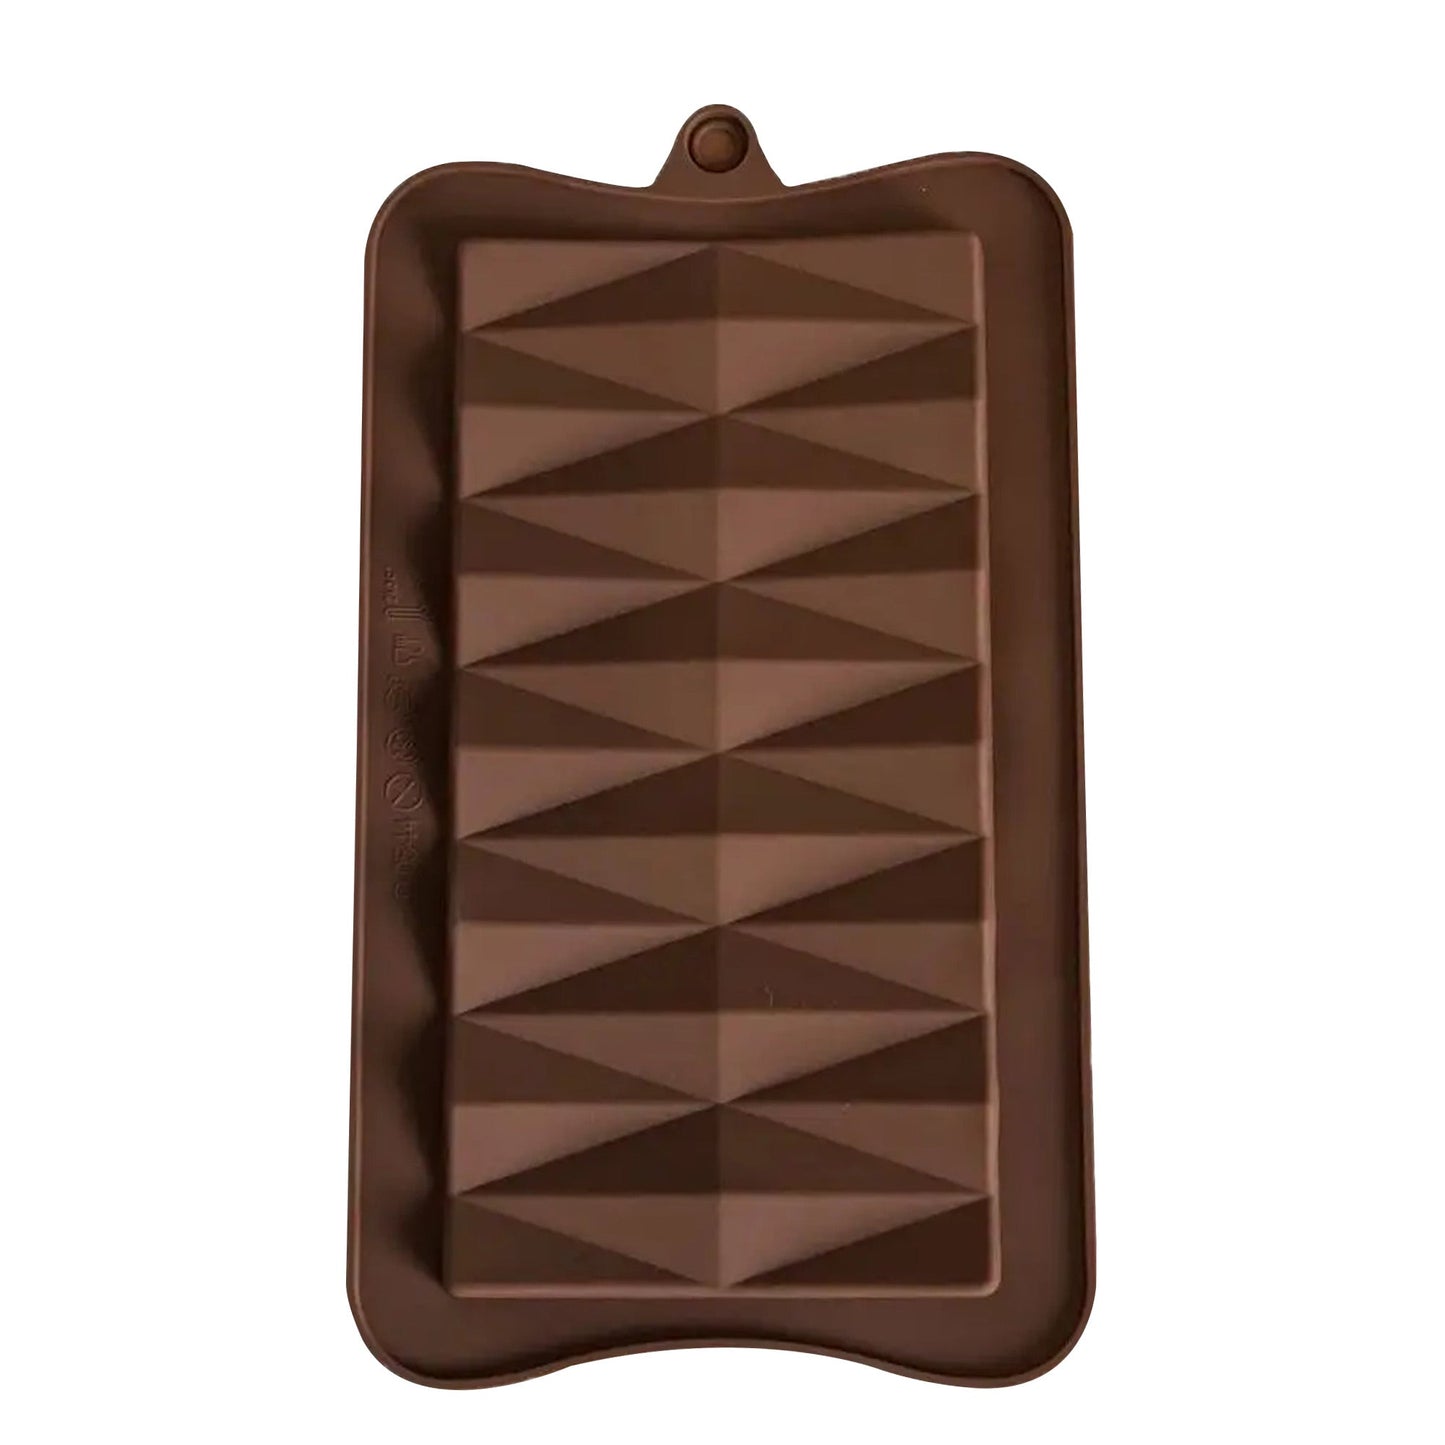 Rhombus Design Chocolate Bar Silicone Mold